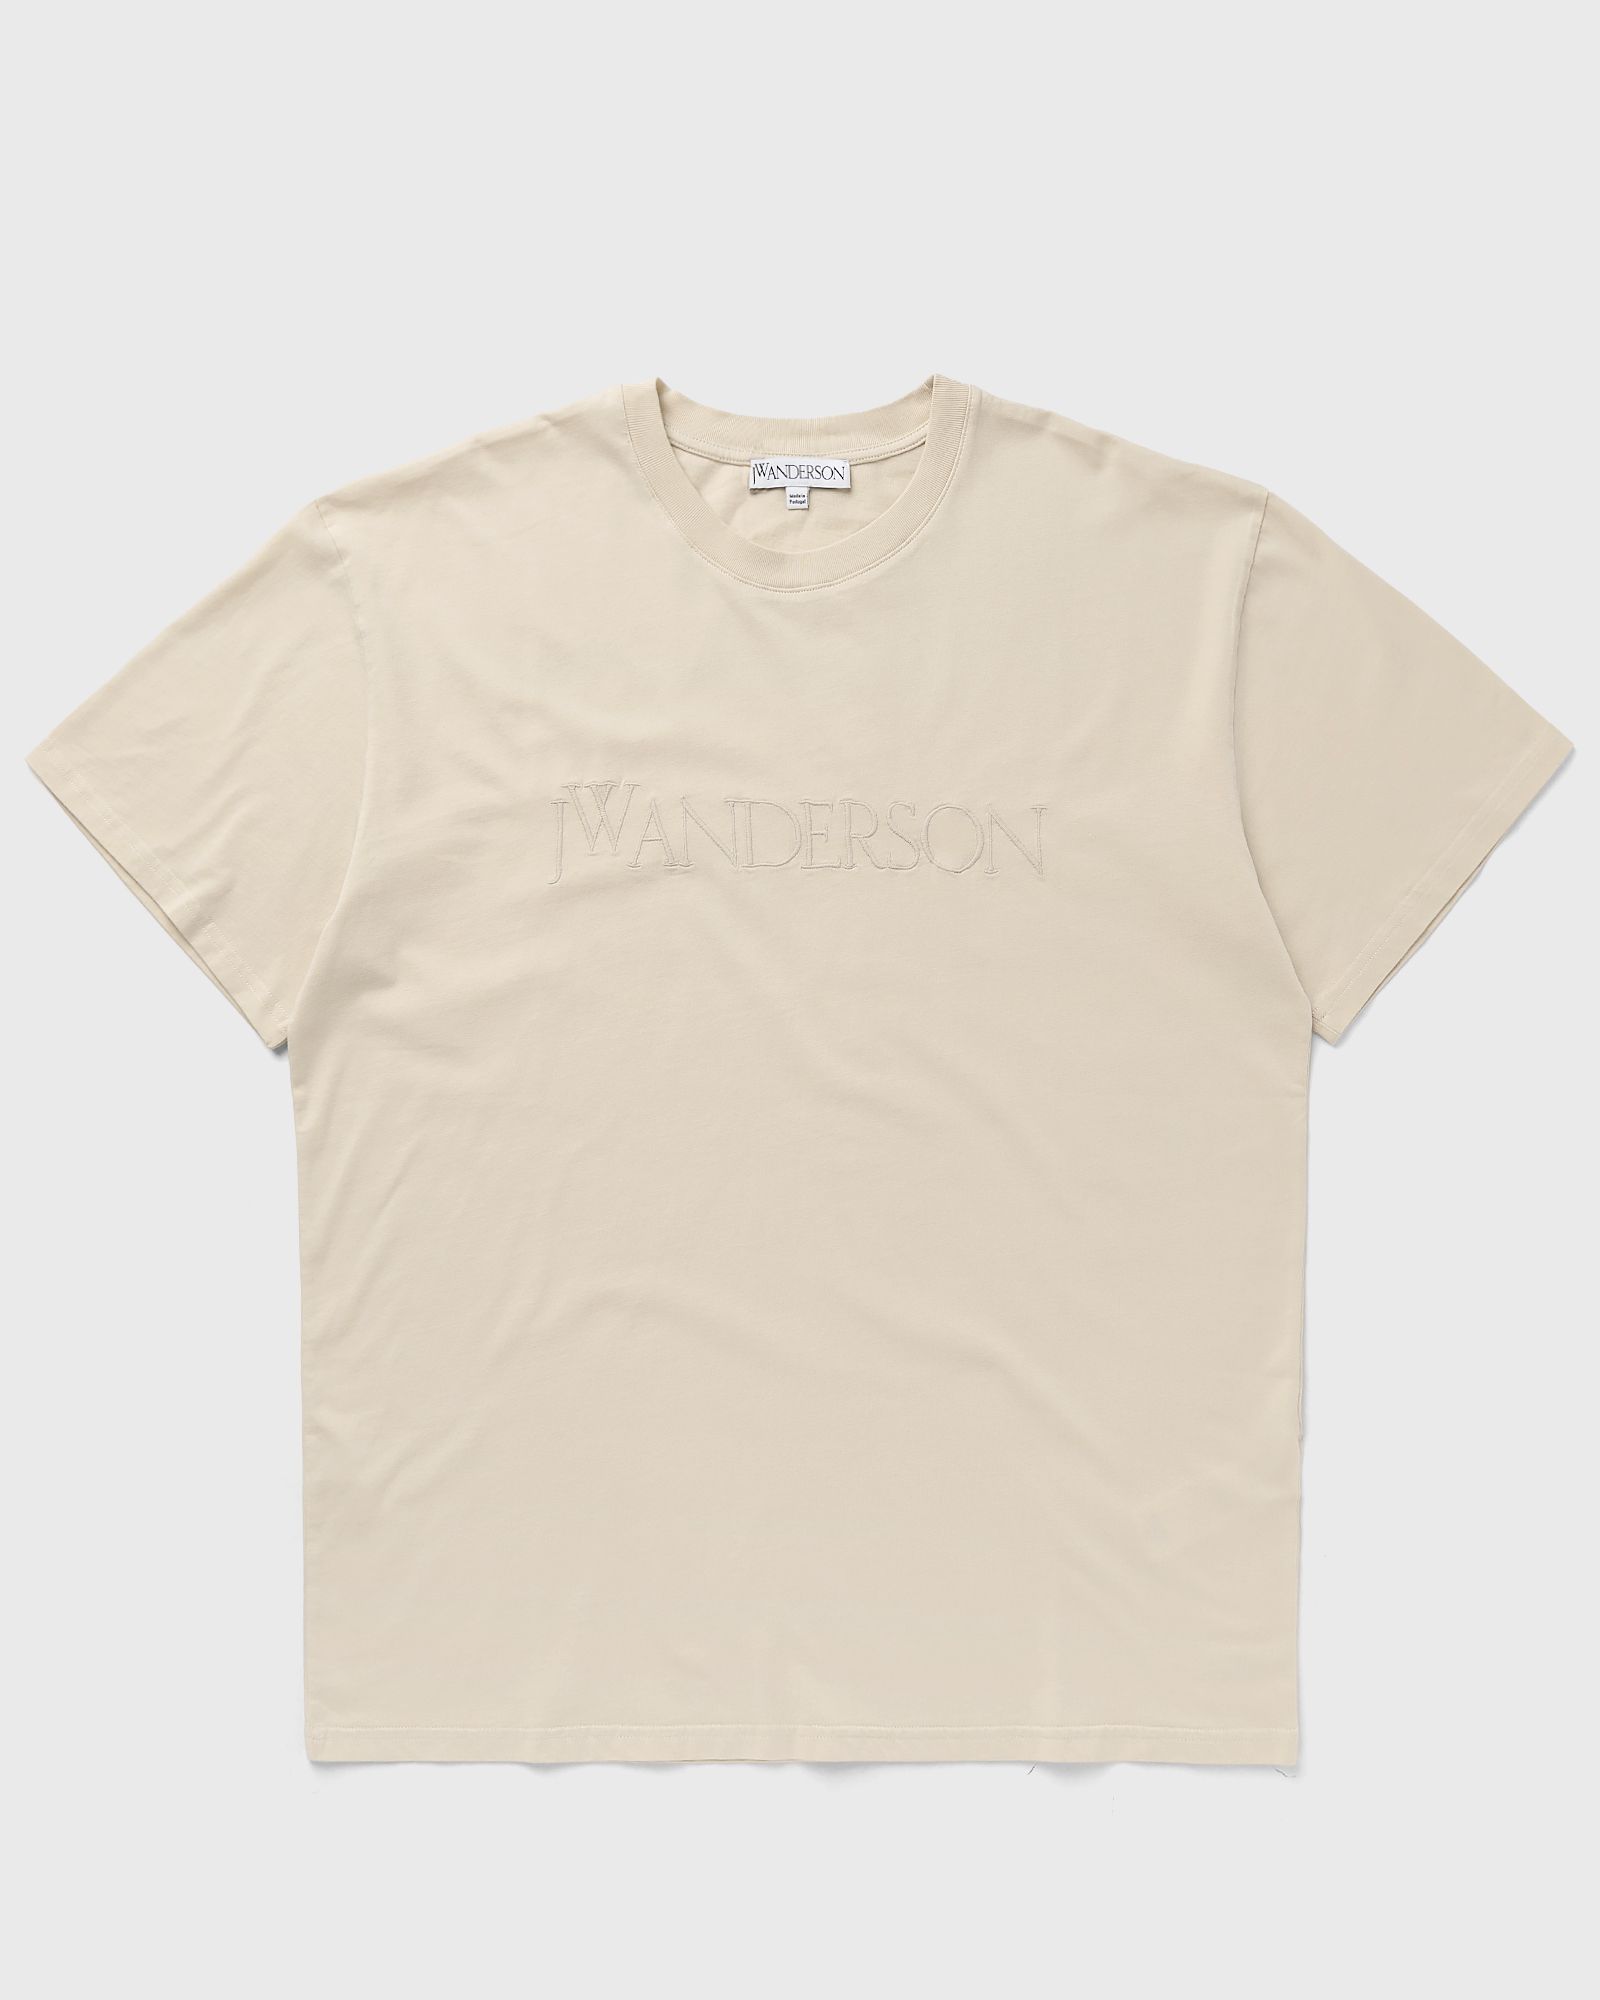 JW Anderson - logo embroidery t-shirt men shortsleeves beige in größe:s